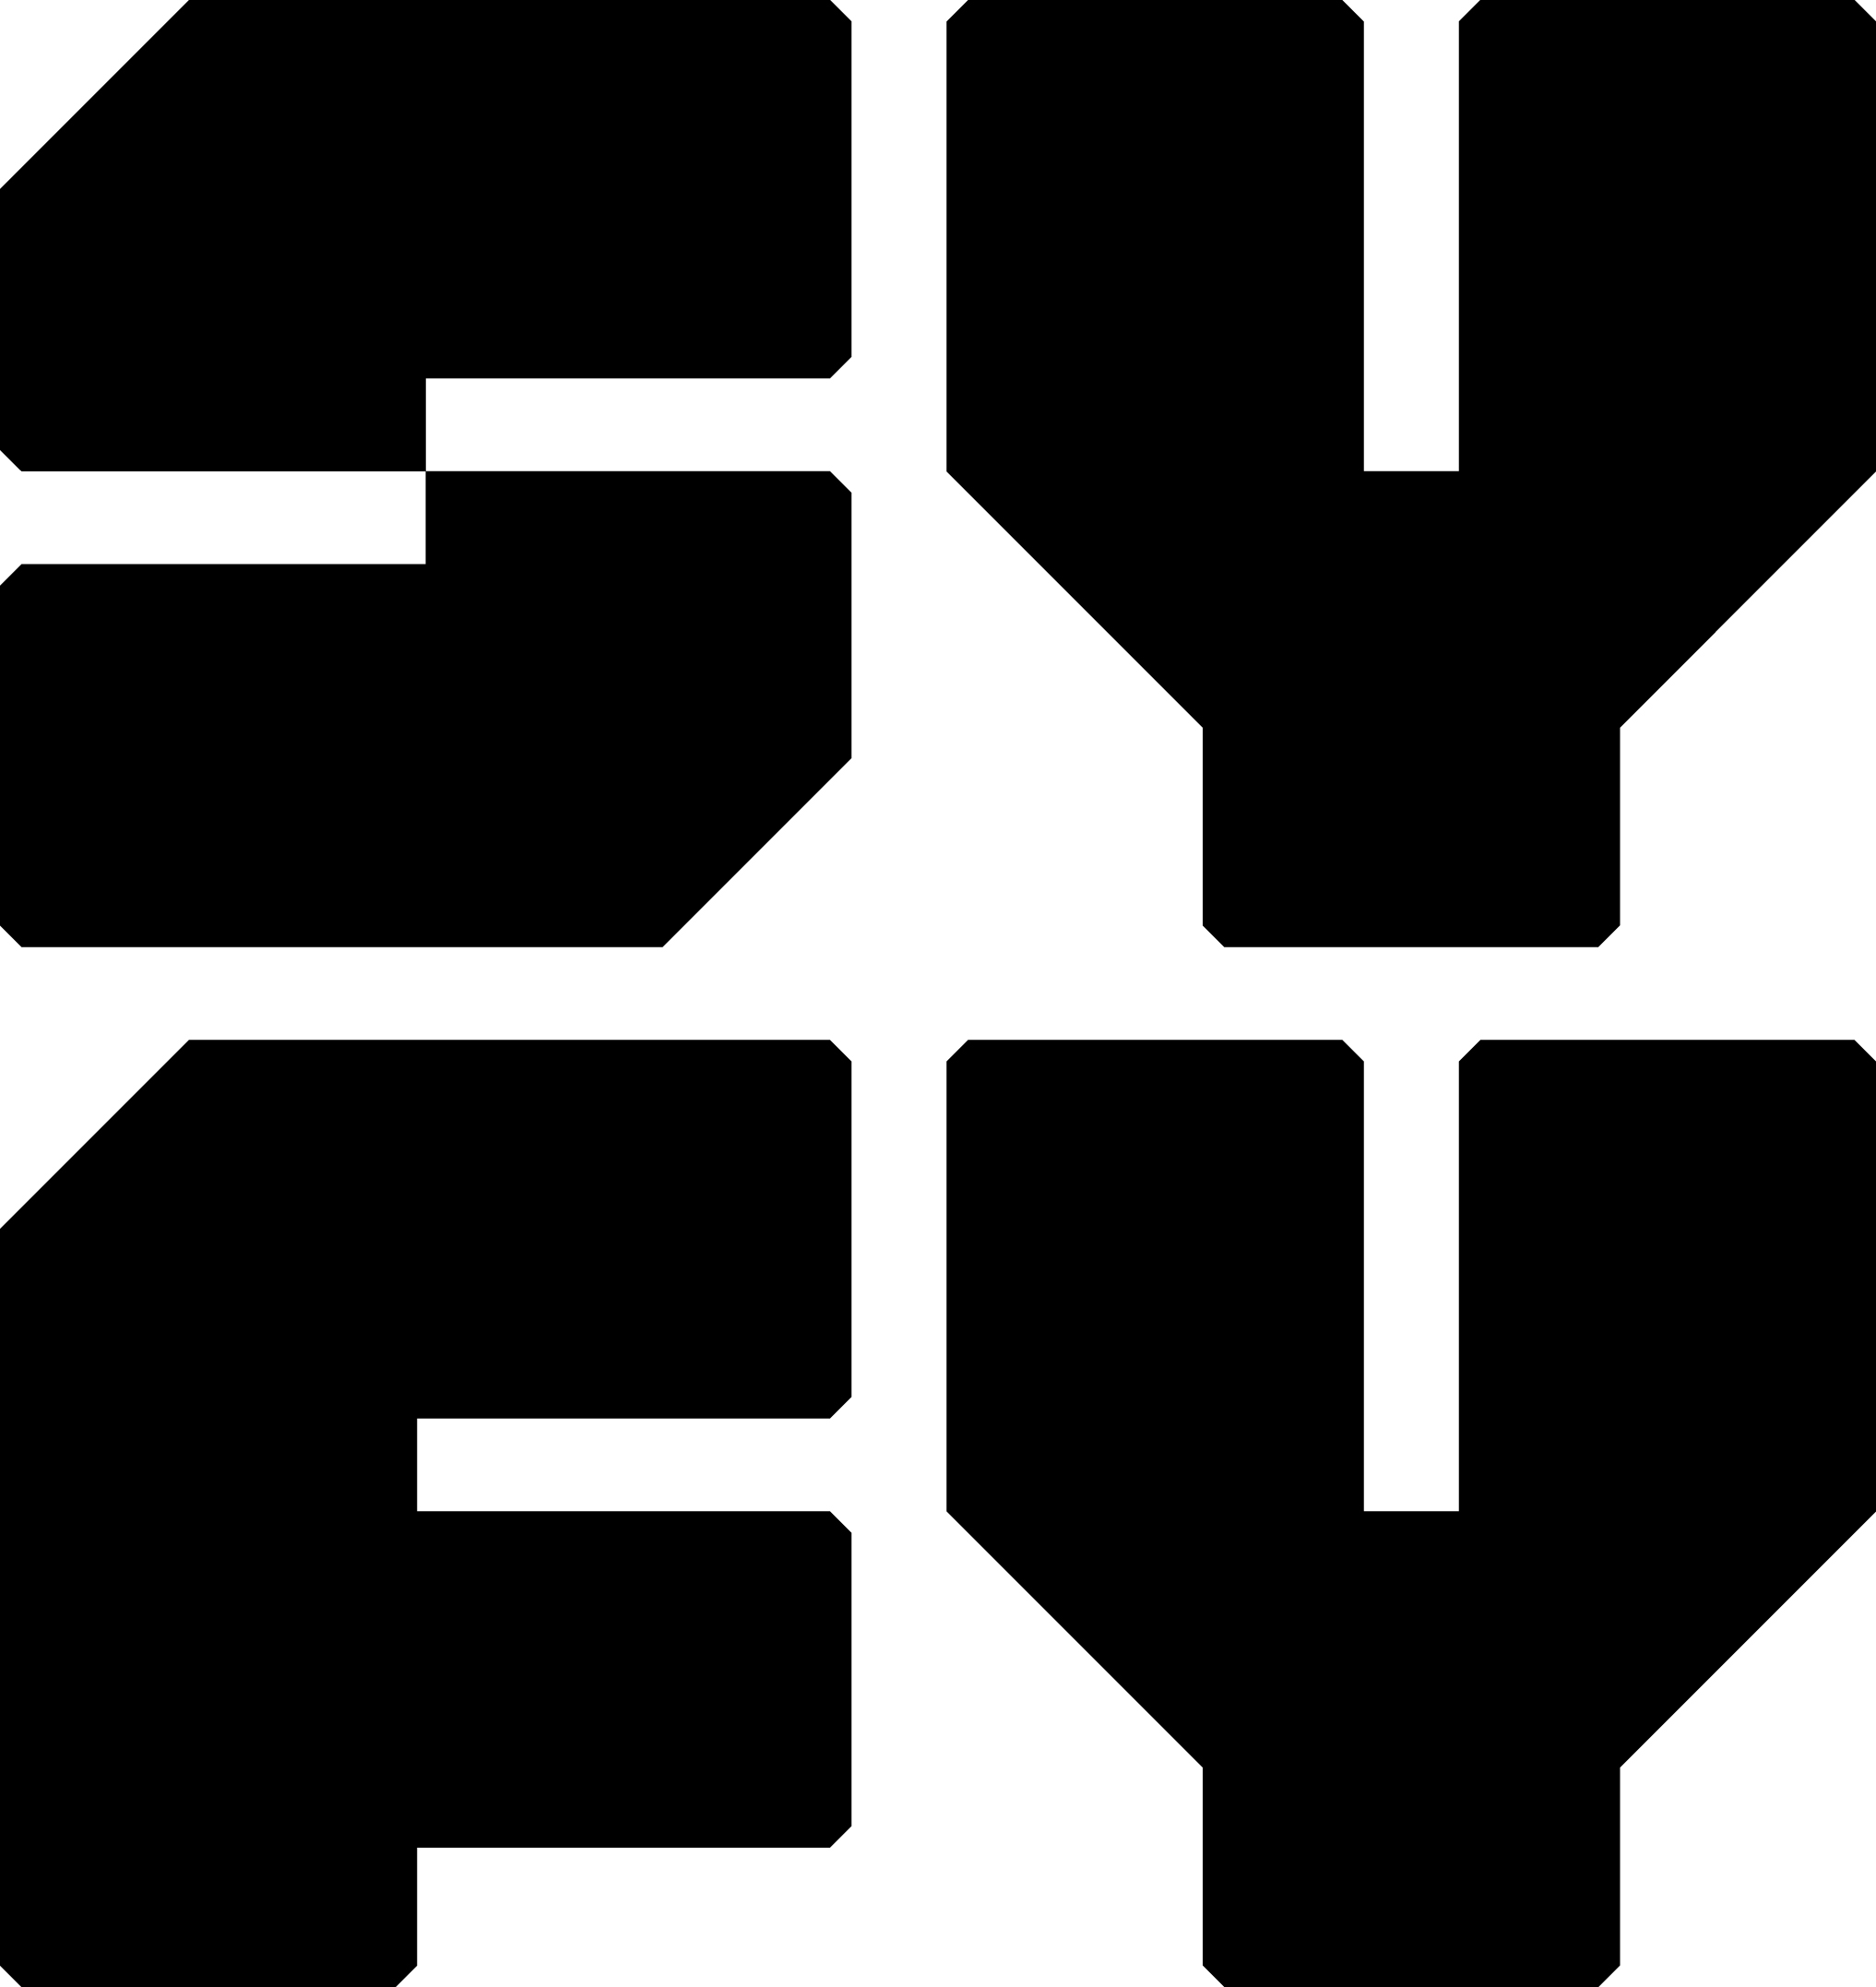 syfy_logo_050317_stacked